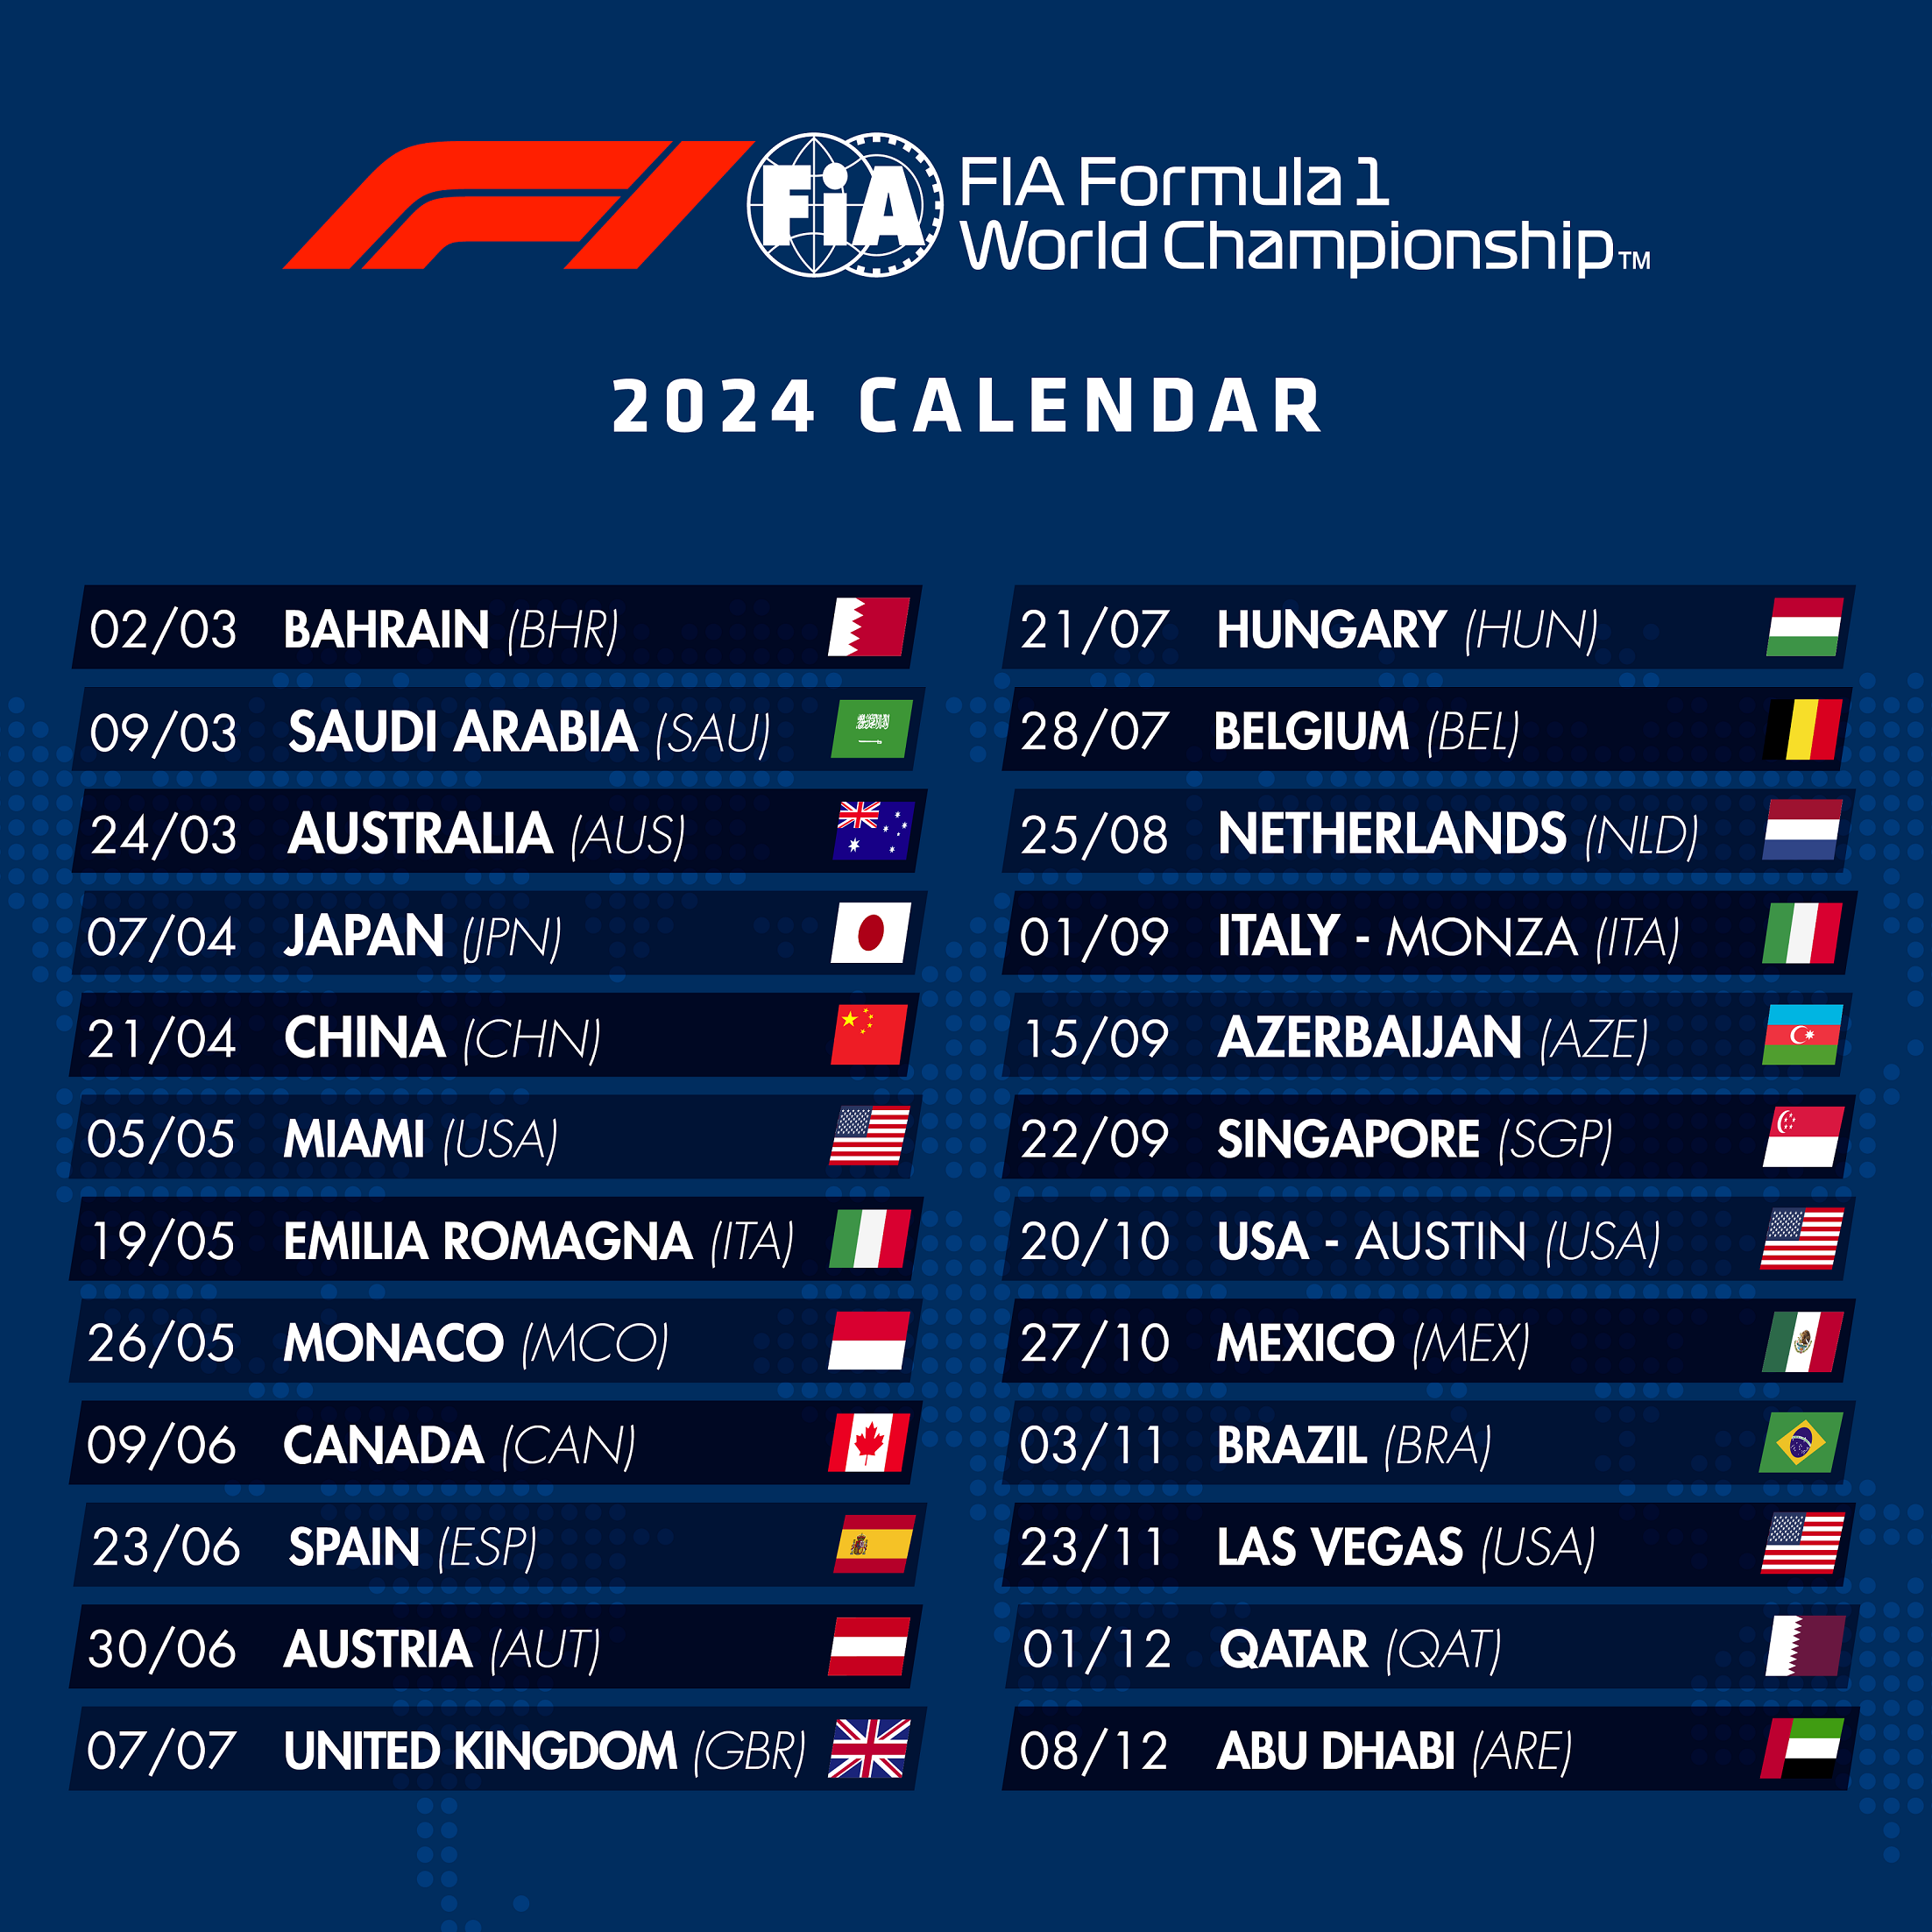 Formula 1 2024 schedule released